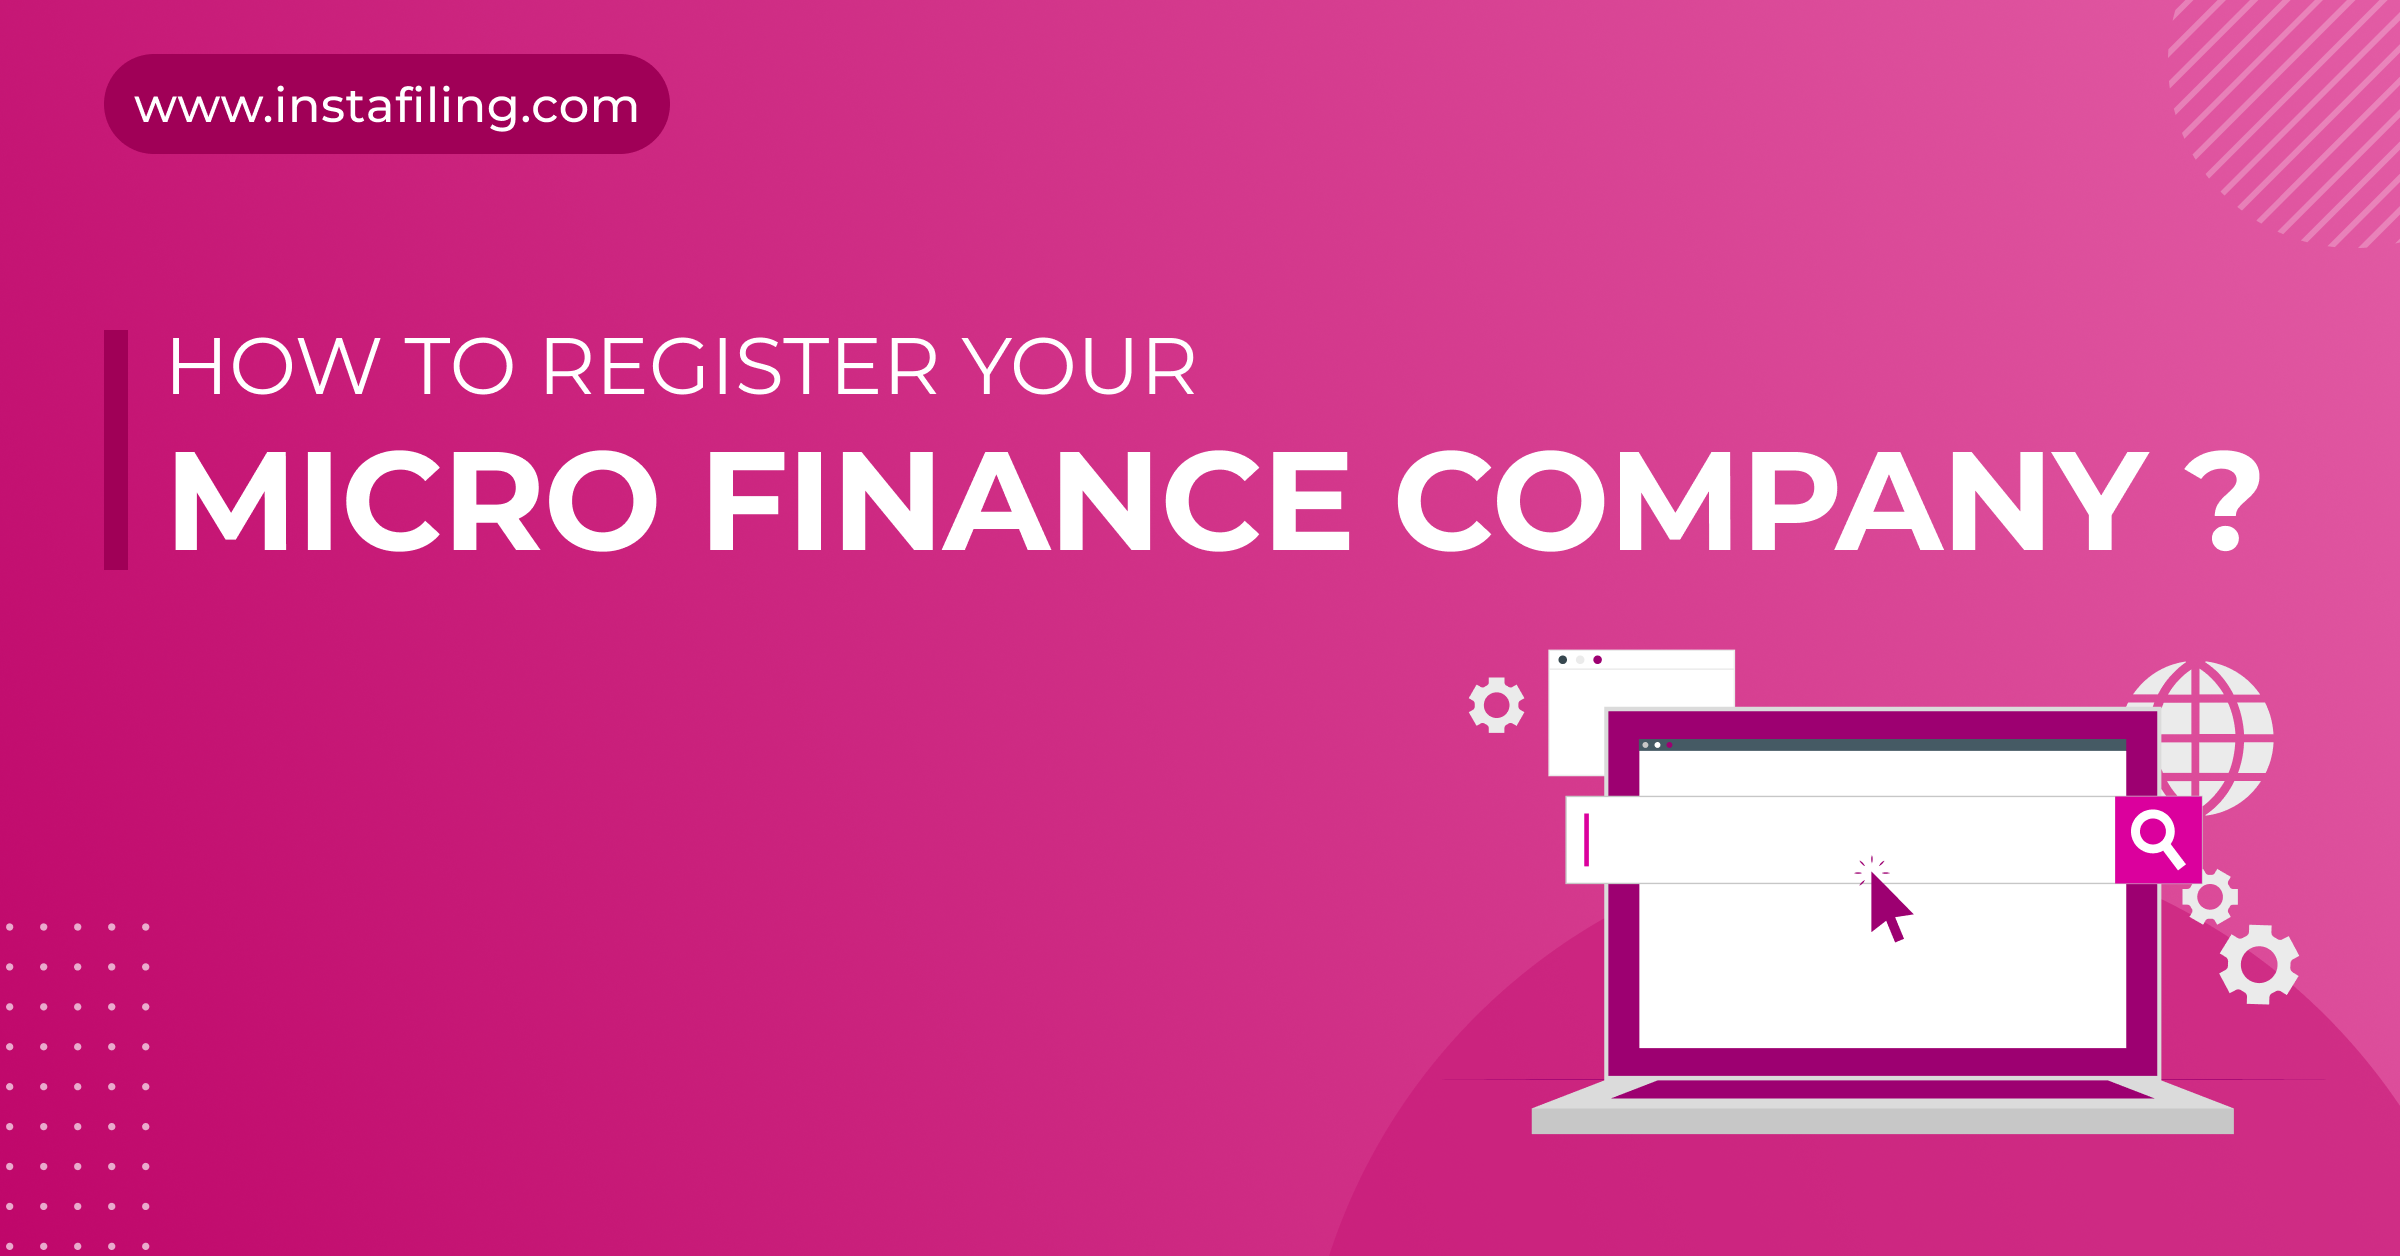 Minute Finance Company Registration